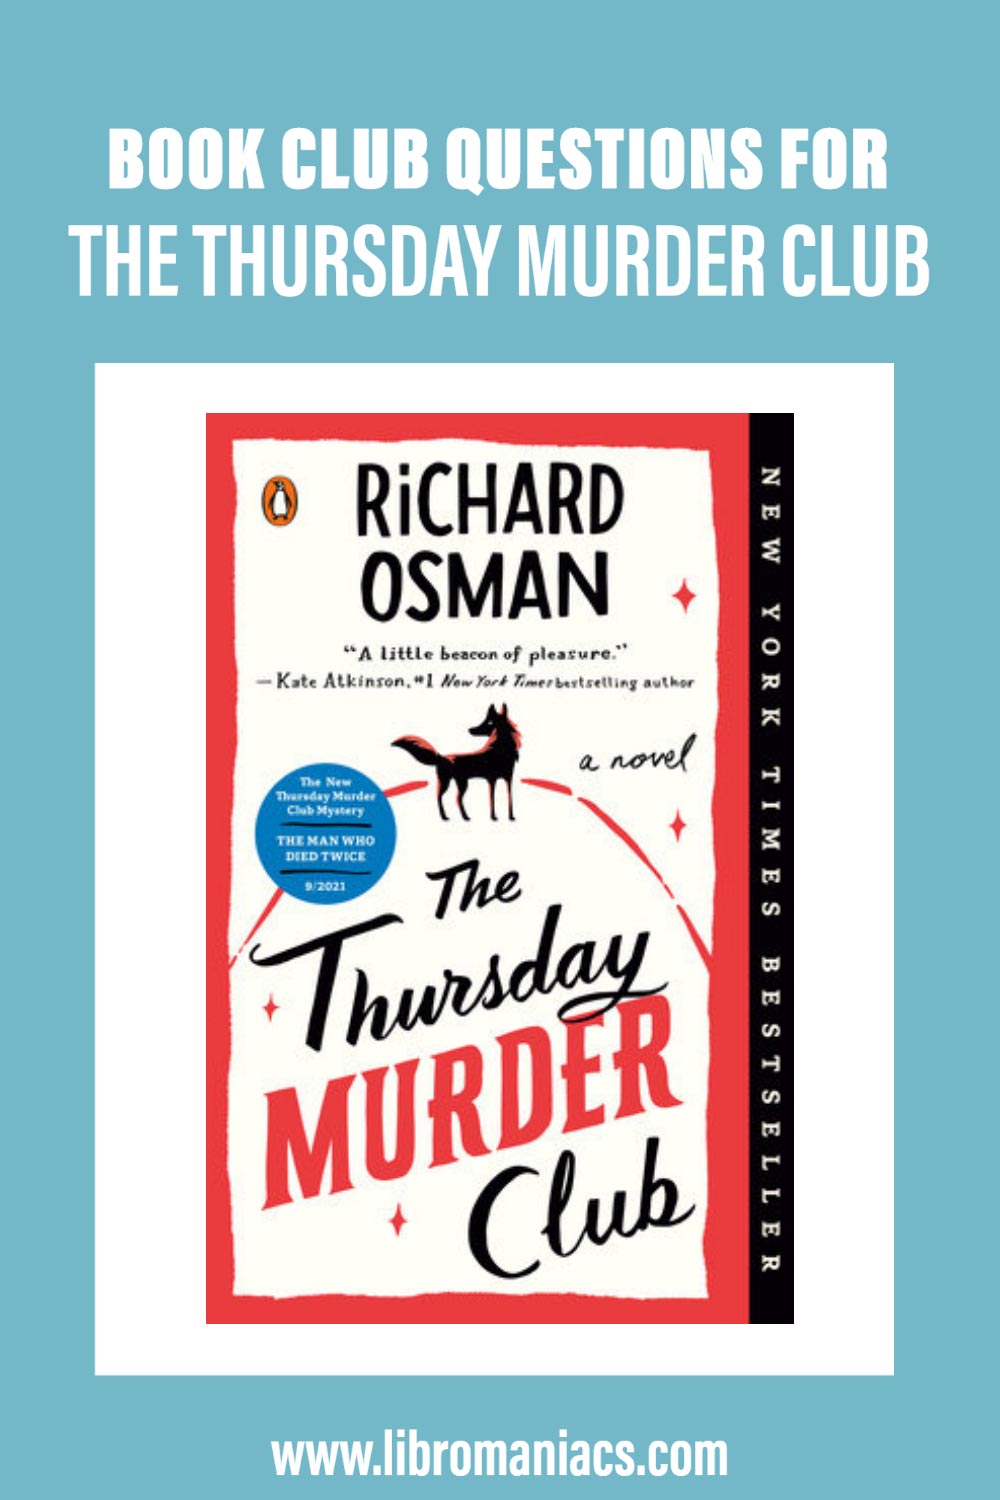 Book club questions for The Thursday Murder Club